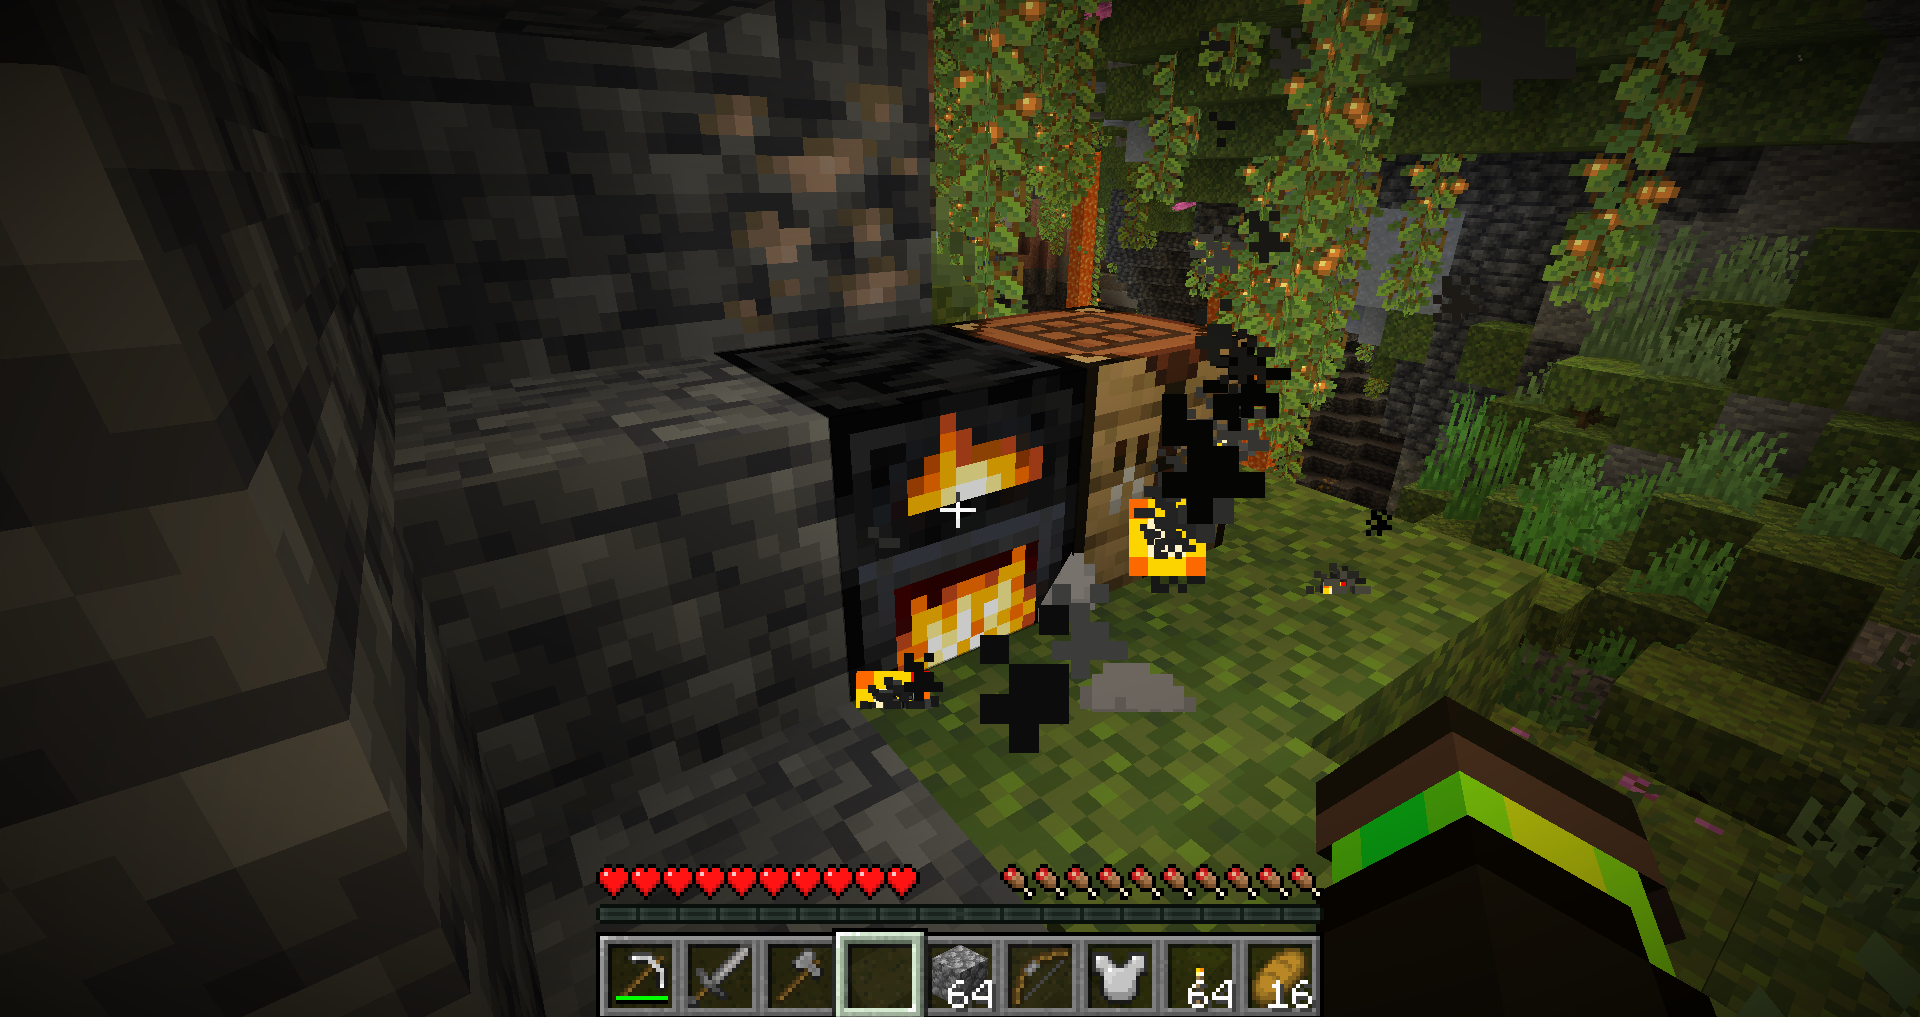 Coal furnace